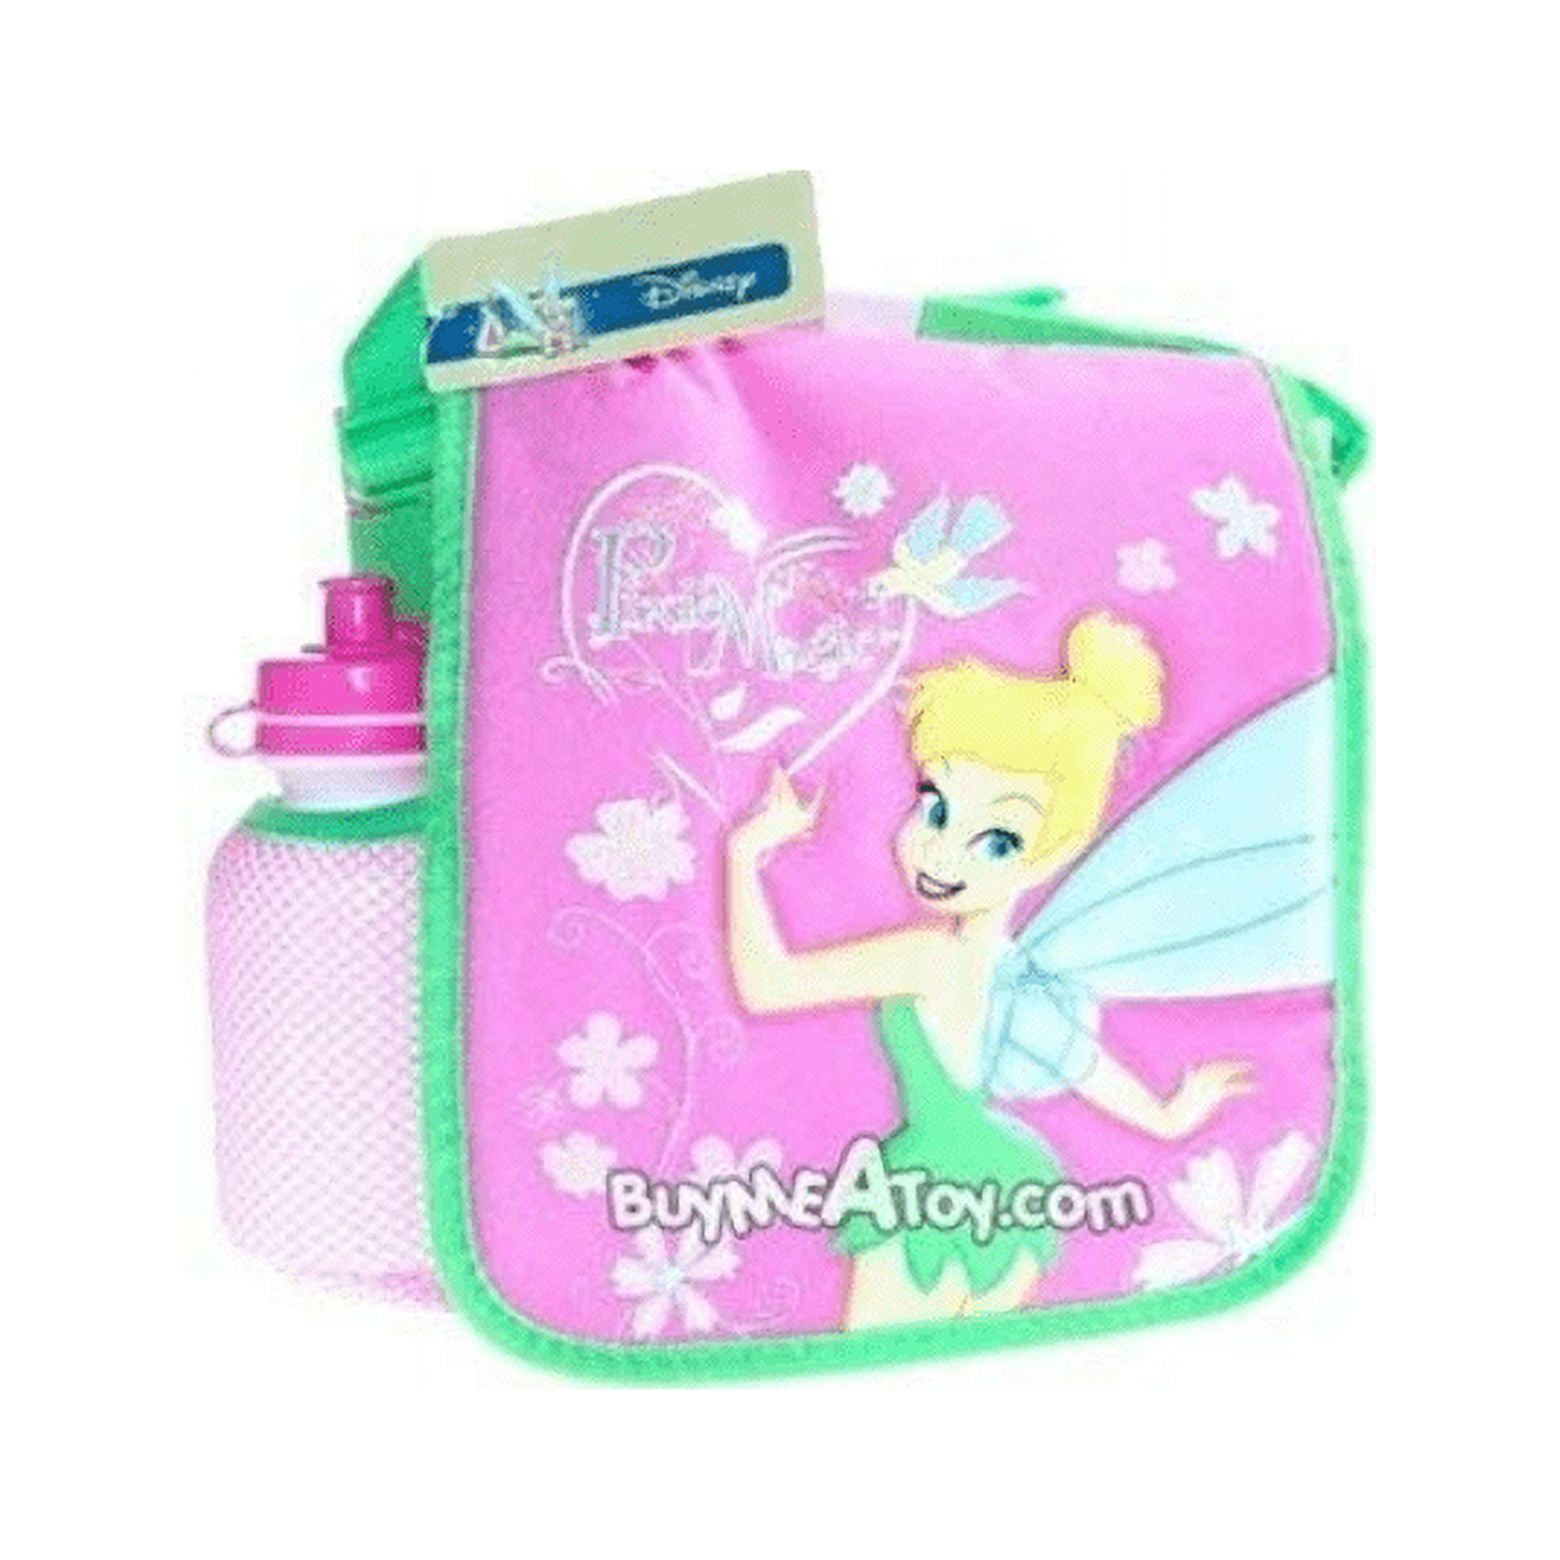 Disney Princess Lunch Box Bag 3-D Eva Molded - Ariel Belle Aurora Tiana Cinderella